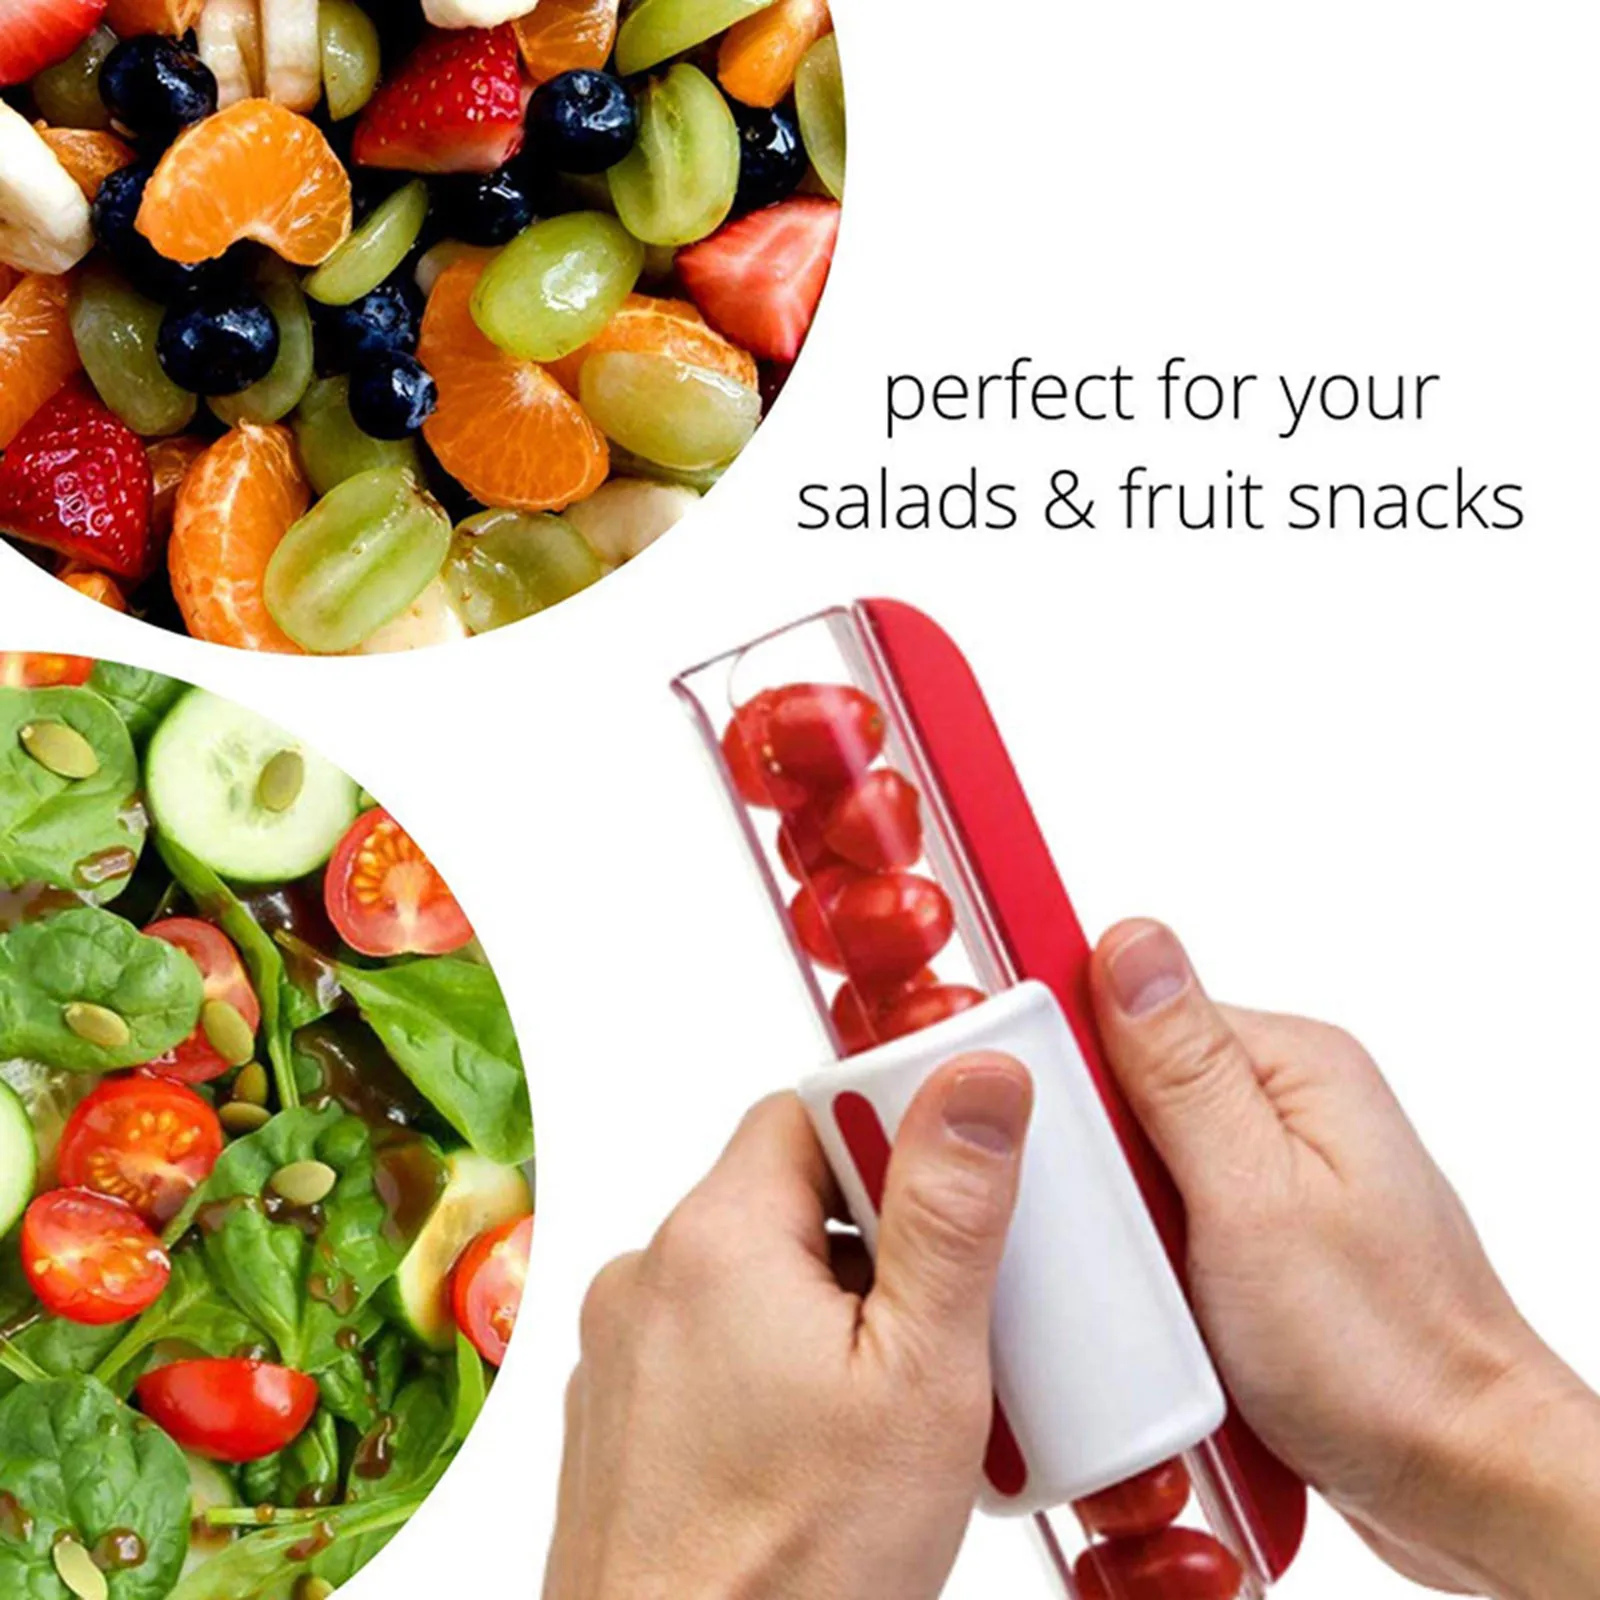 https://ae01.alicdn.com/kf/H2b6a358fc22848a187ce69e52d83b44bn/Tomato-Cherry-Cutter-Vegetable-Chip-Slicer-Fruit-Zip-Slicer-Knife-Salad-Maker-Fruit-Chopper-Grape-Cutter.jpg